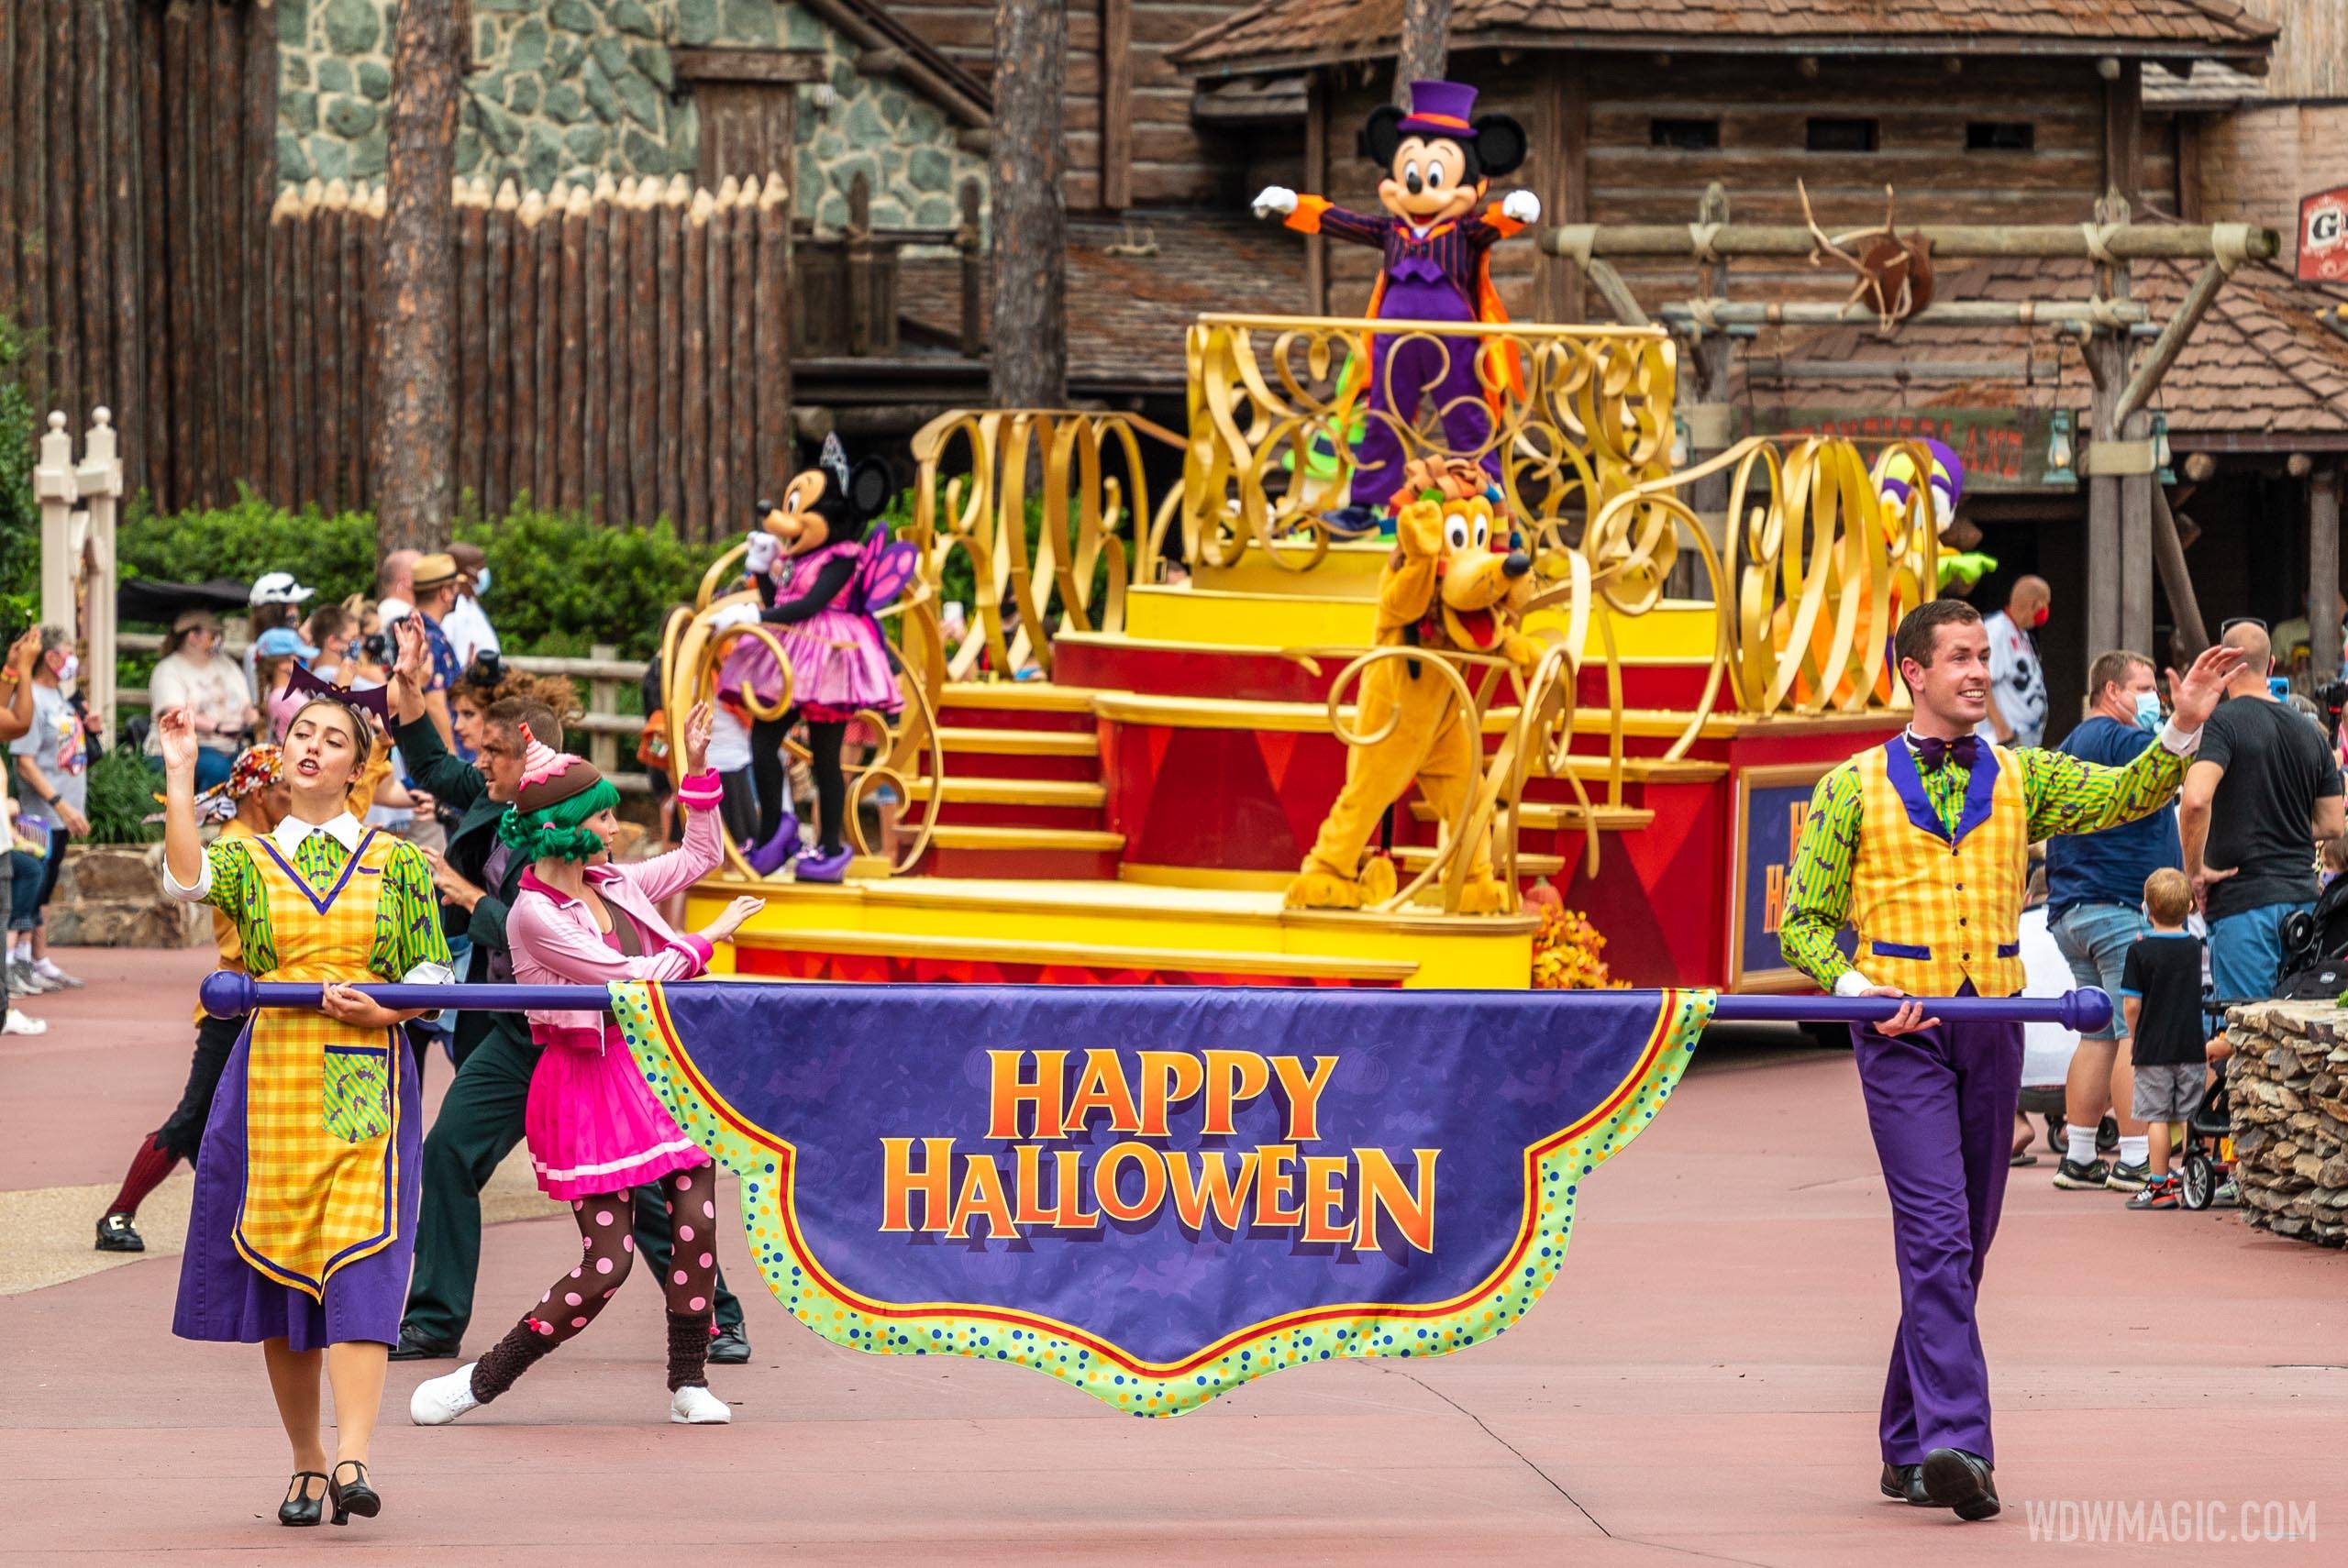 Mickey's Happy Halloween cavalcade